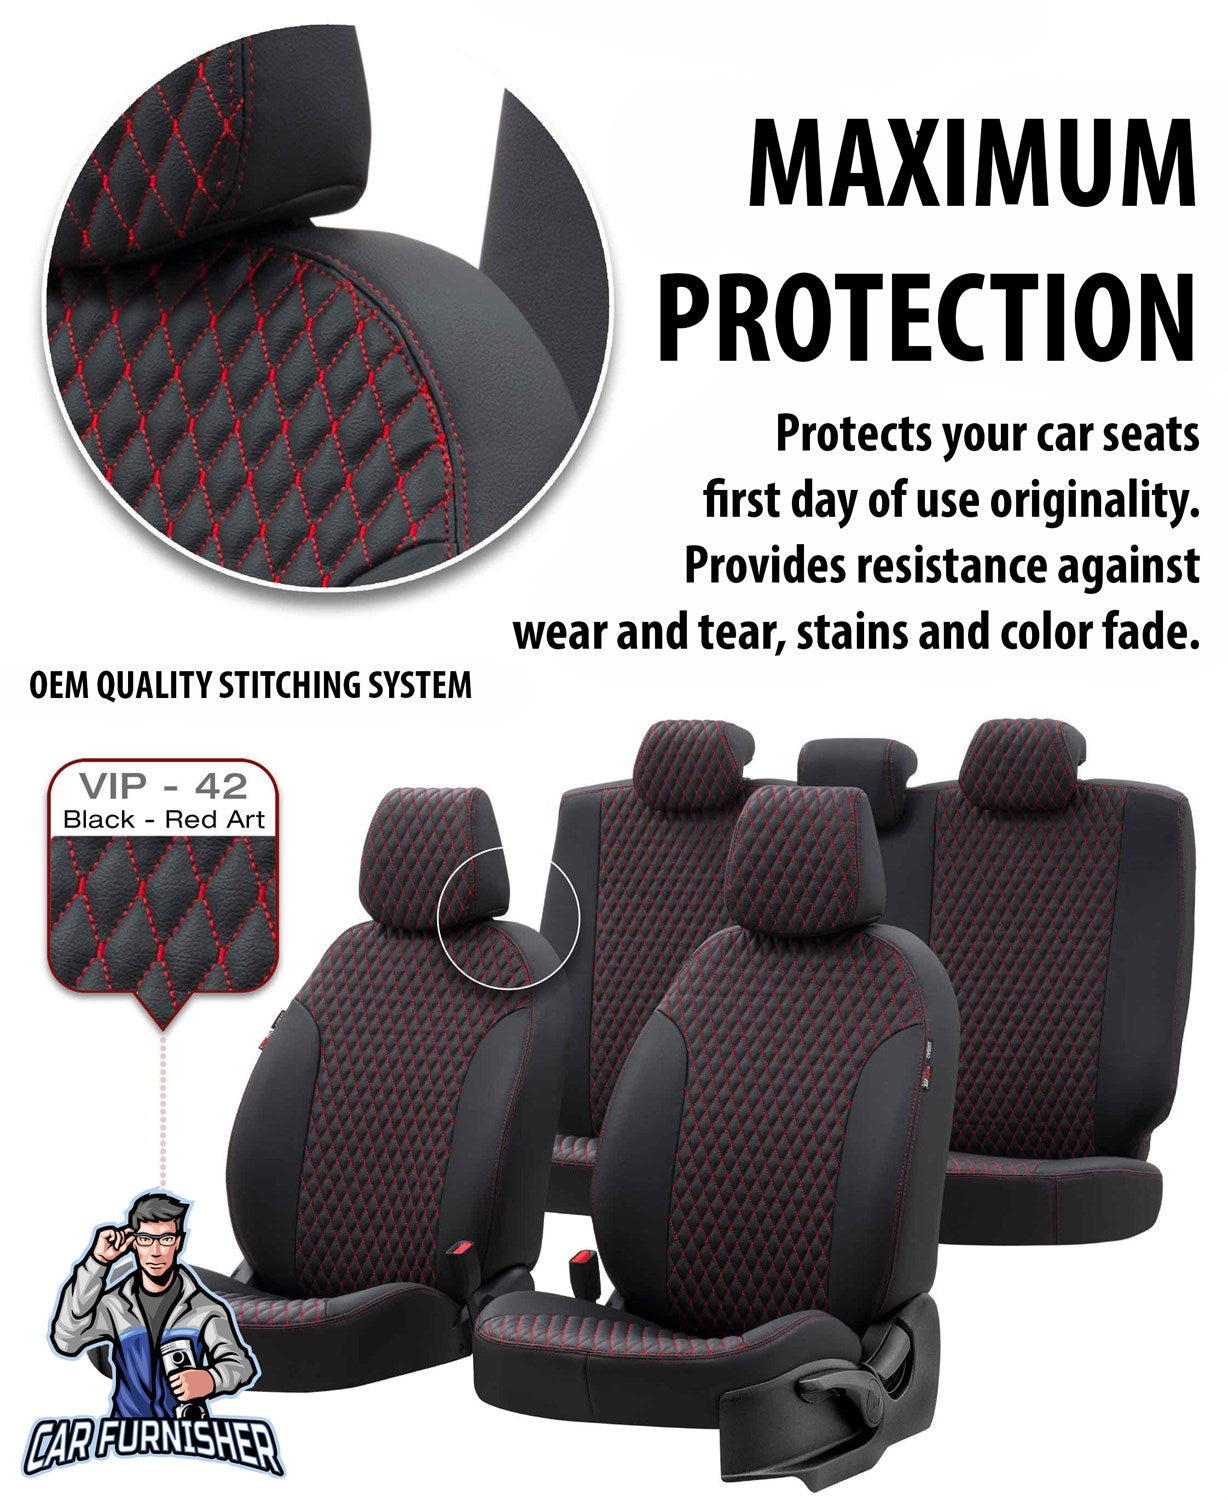 Citroen C3 Seat Covers Amsterdam Leather Design Black Leather